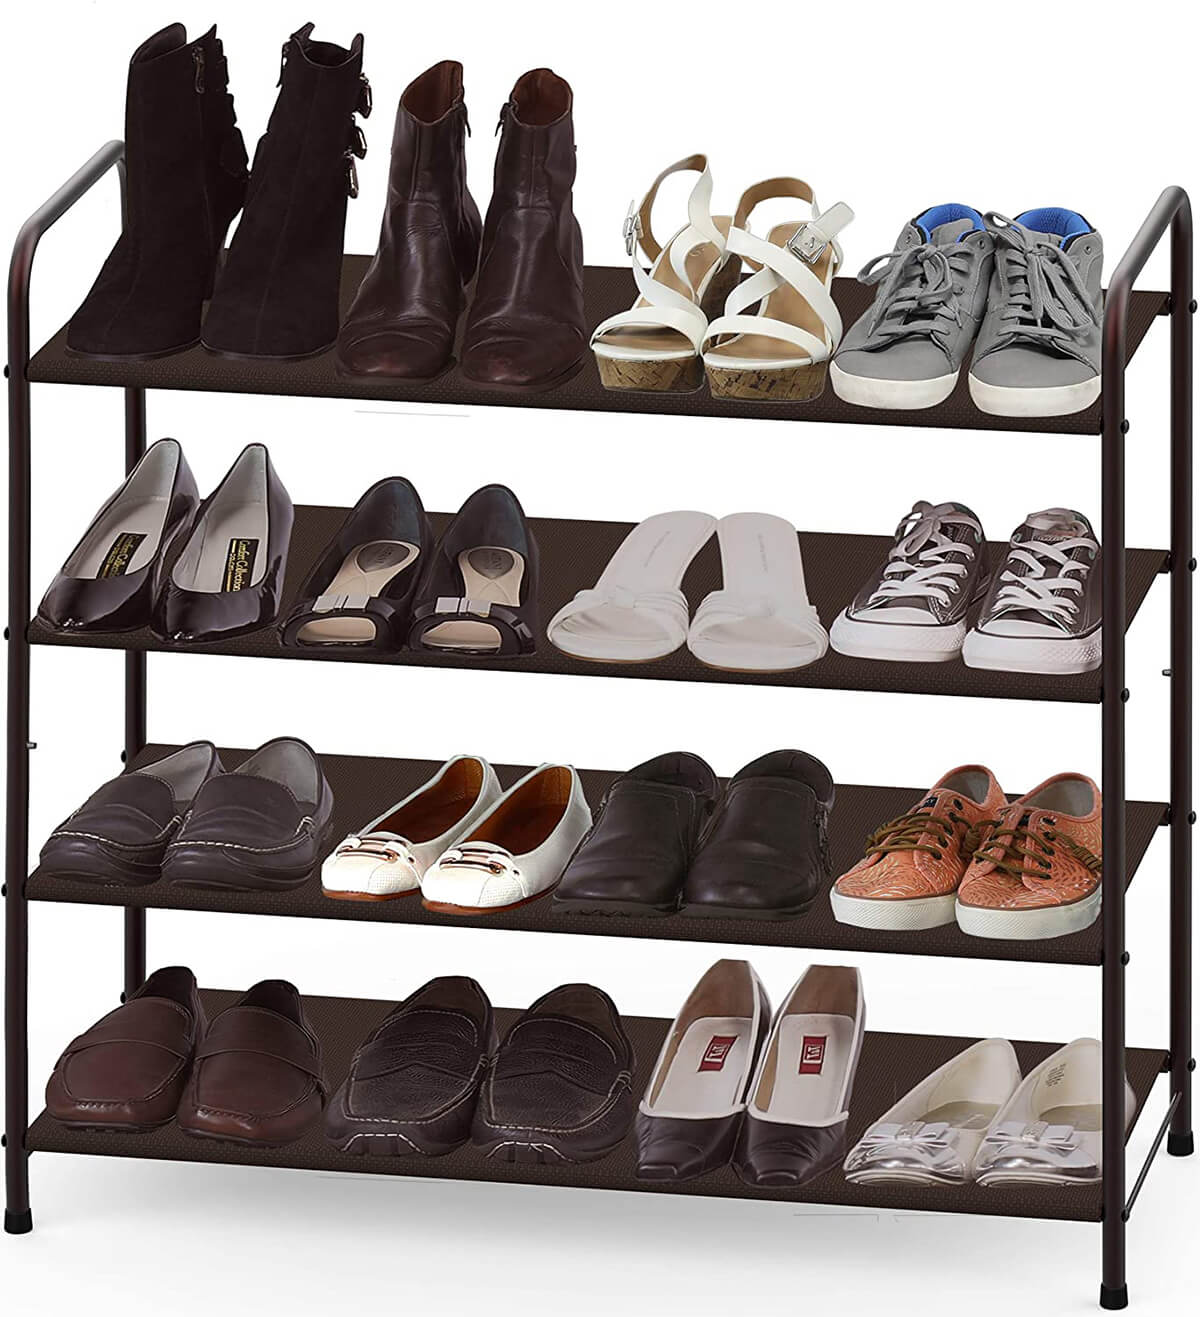 Storage Rack with Fabric Shelves #shoeorganizer #storage #shoe #organizer #decorhomeideas